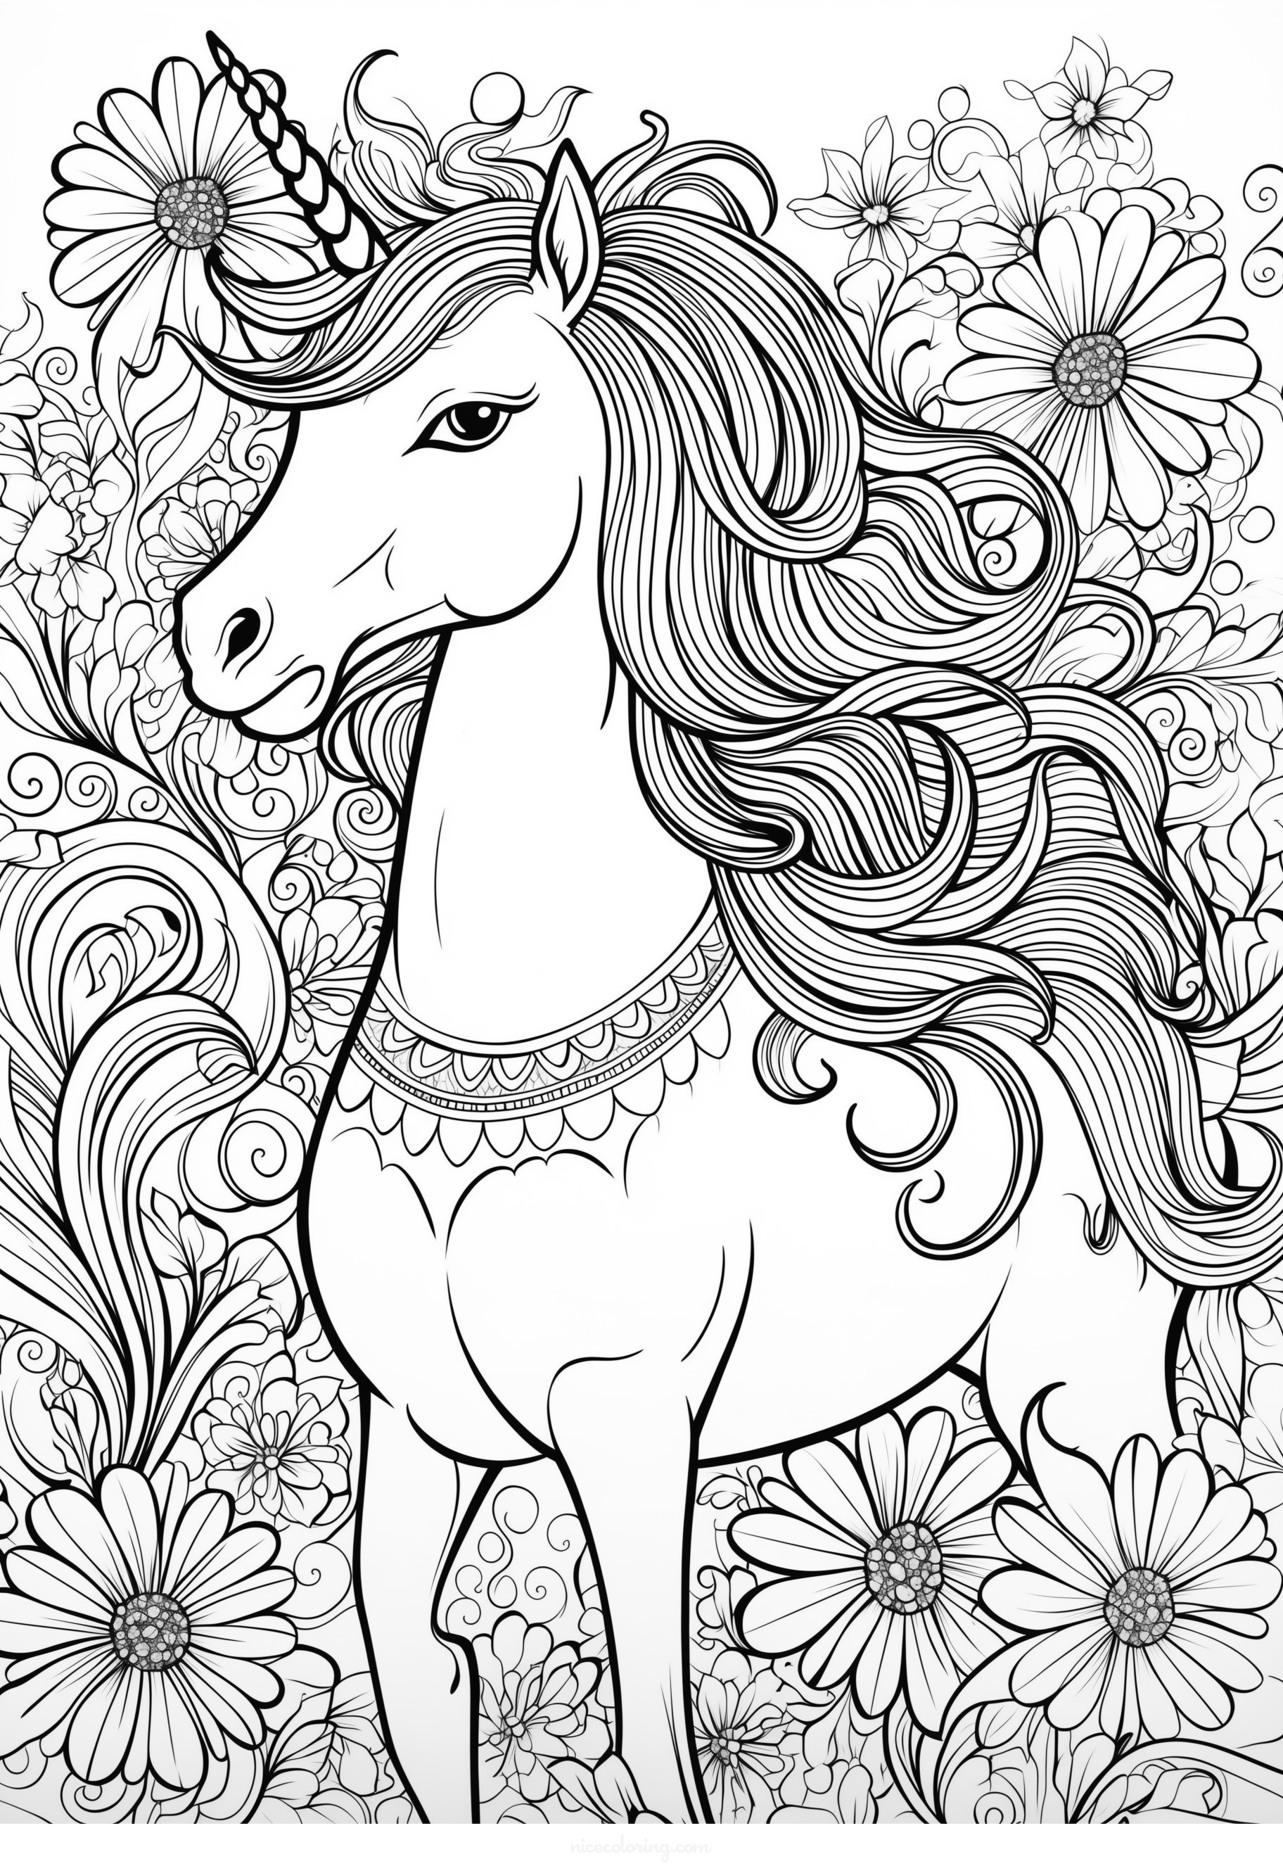 Unicorn dikelilingi bunga halaman mewarnai